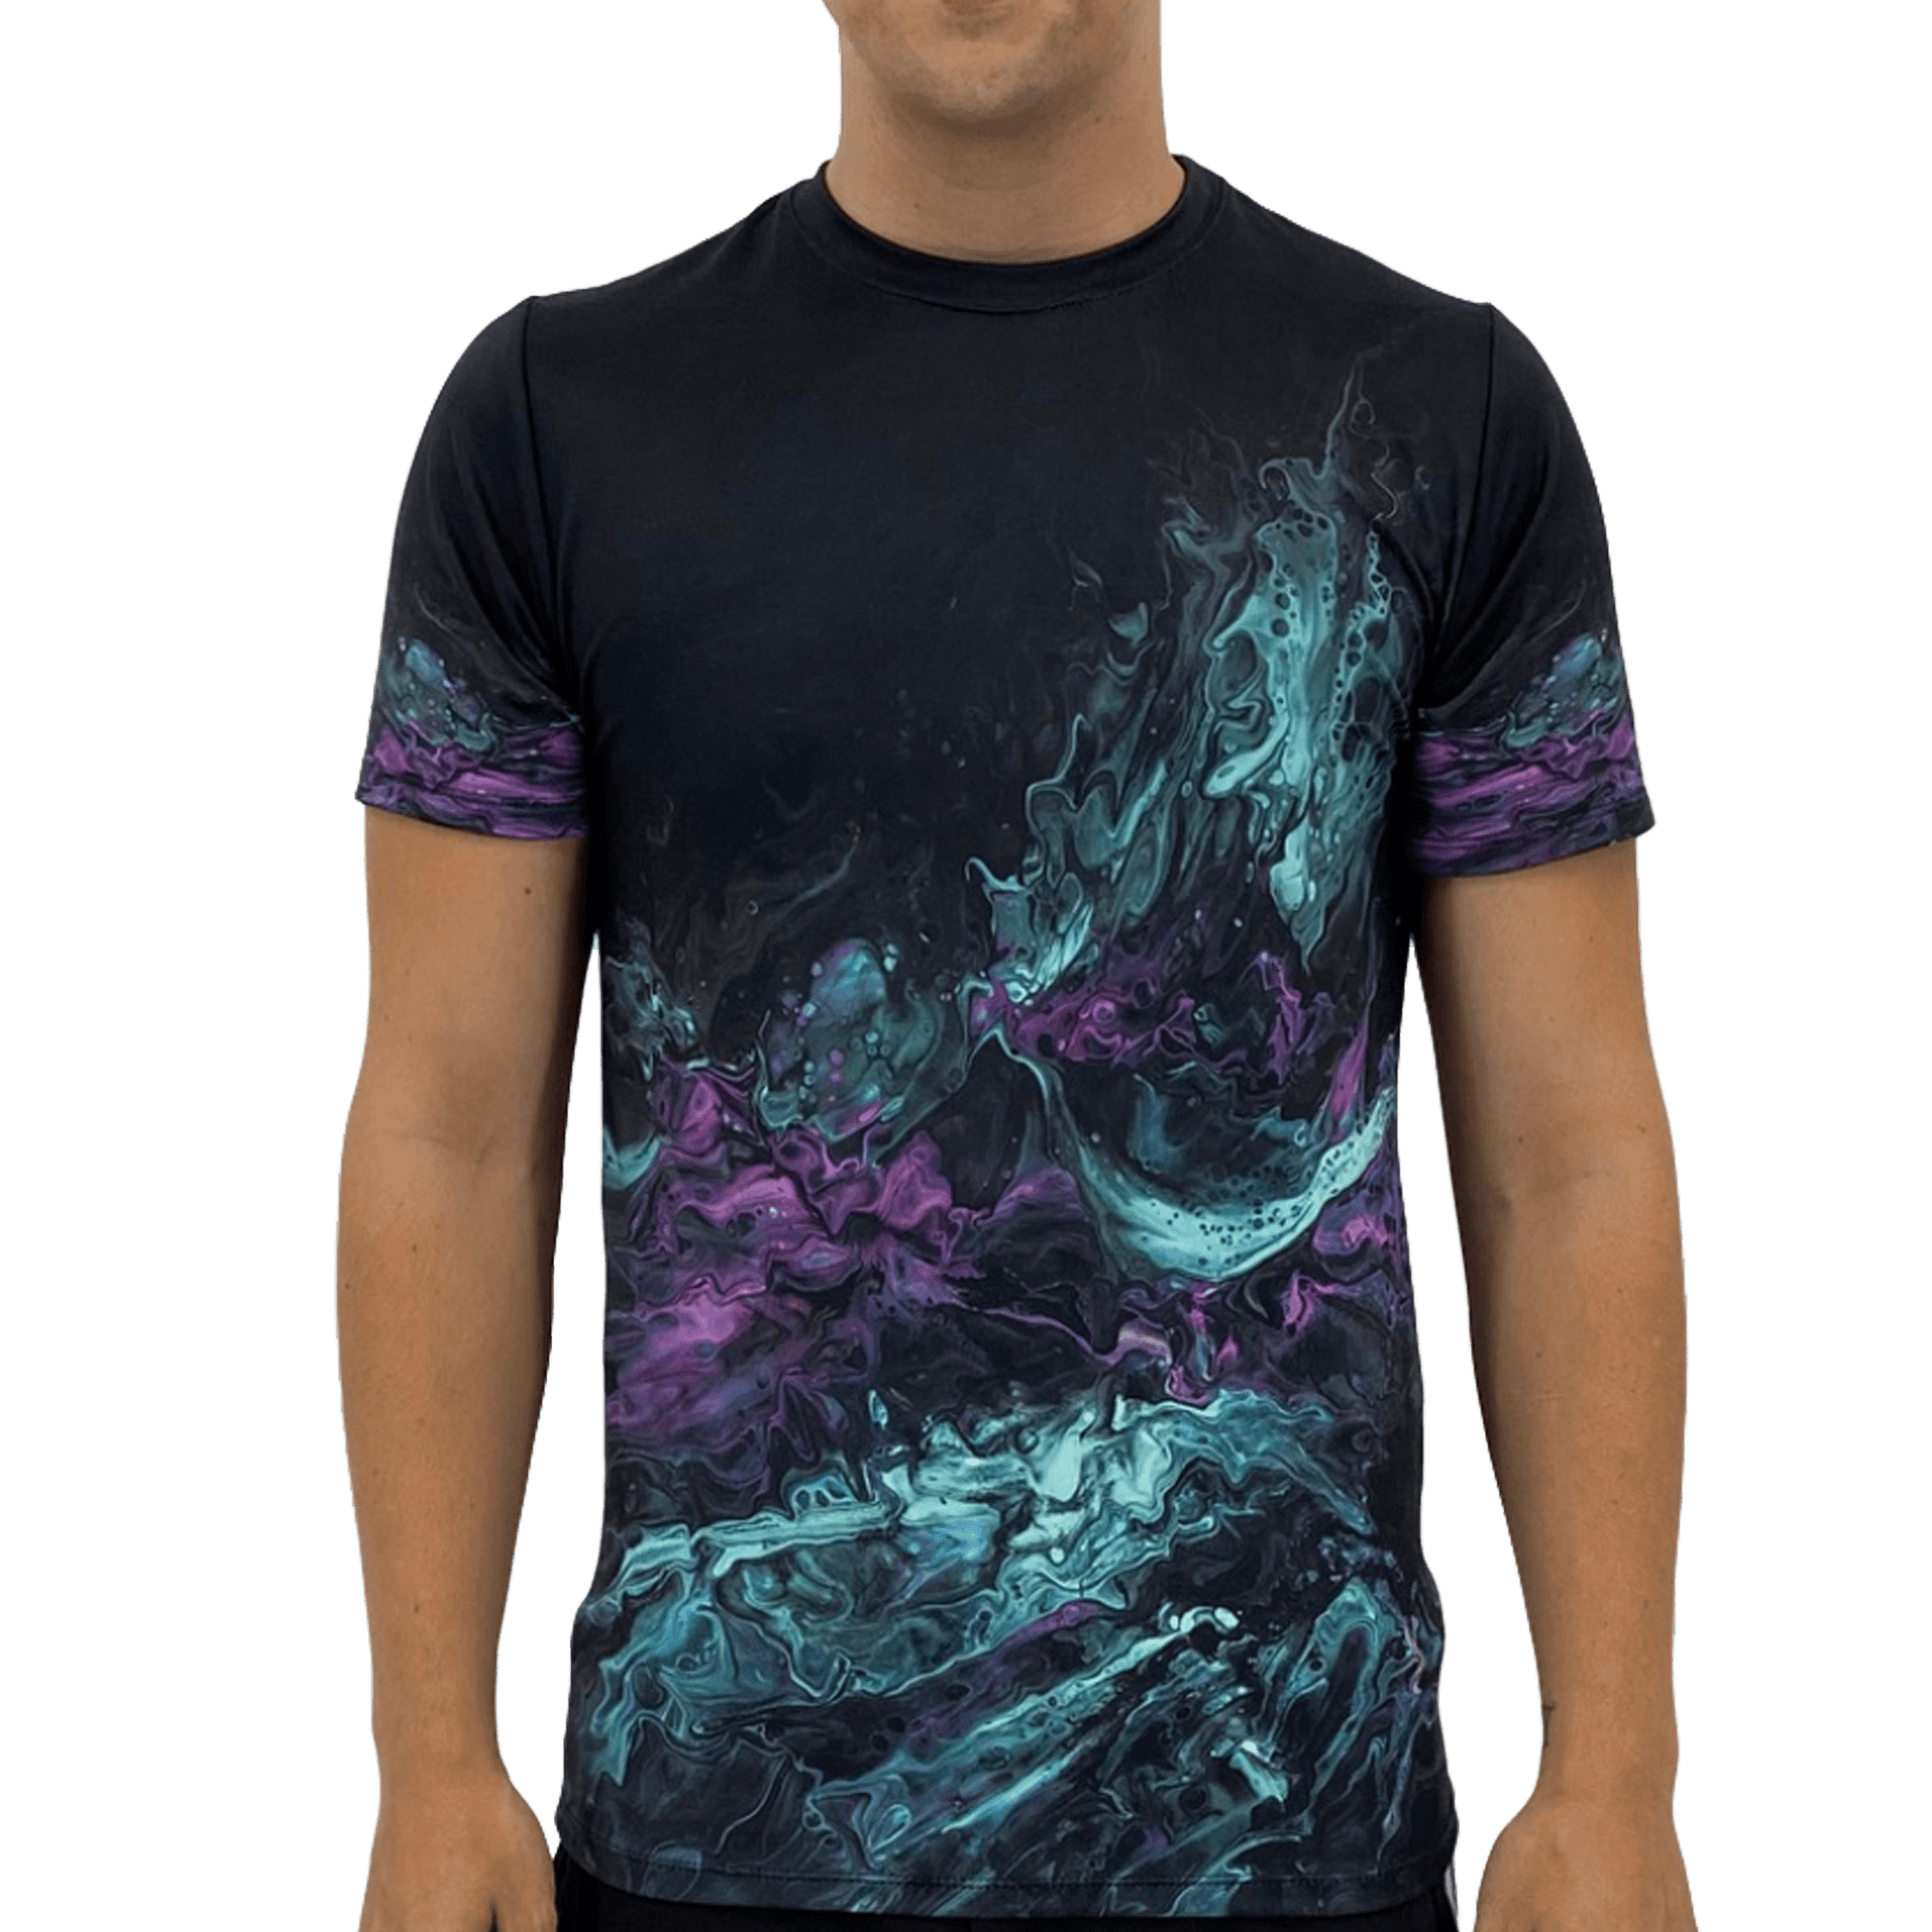 Teal Liquid Men's T-Shirt - USA Made Dropship